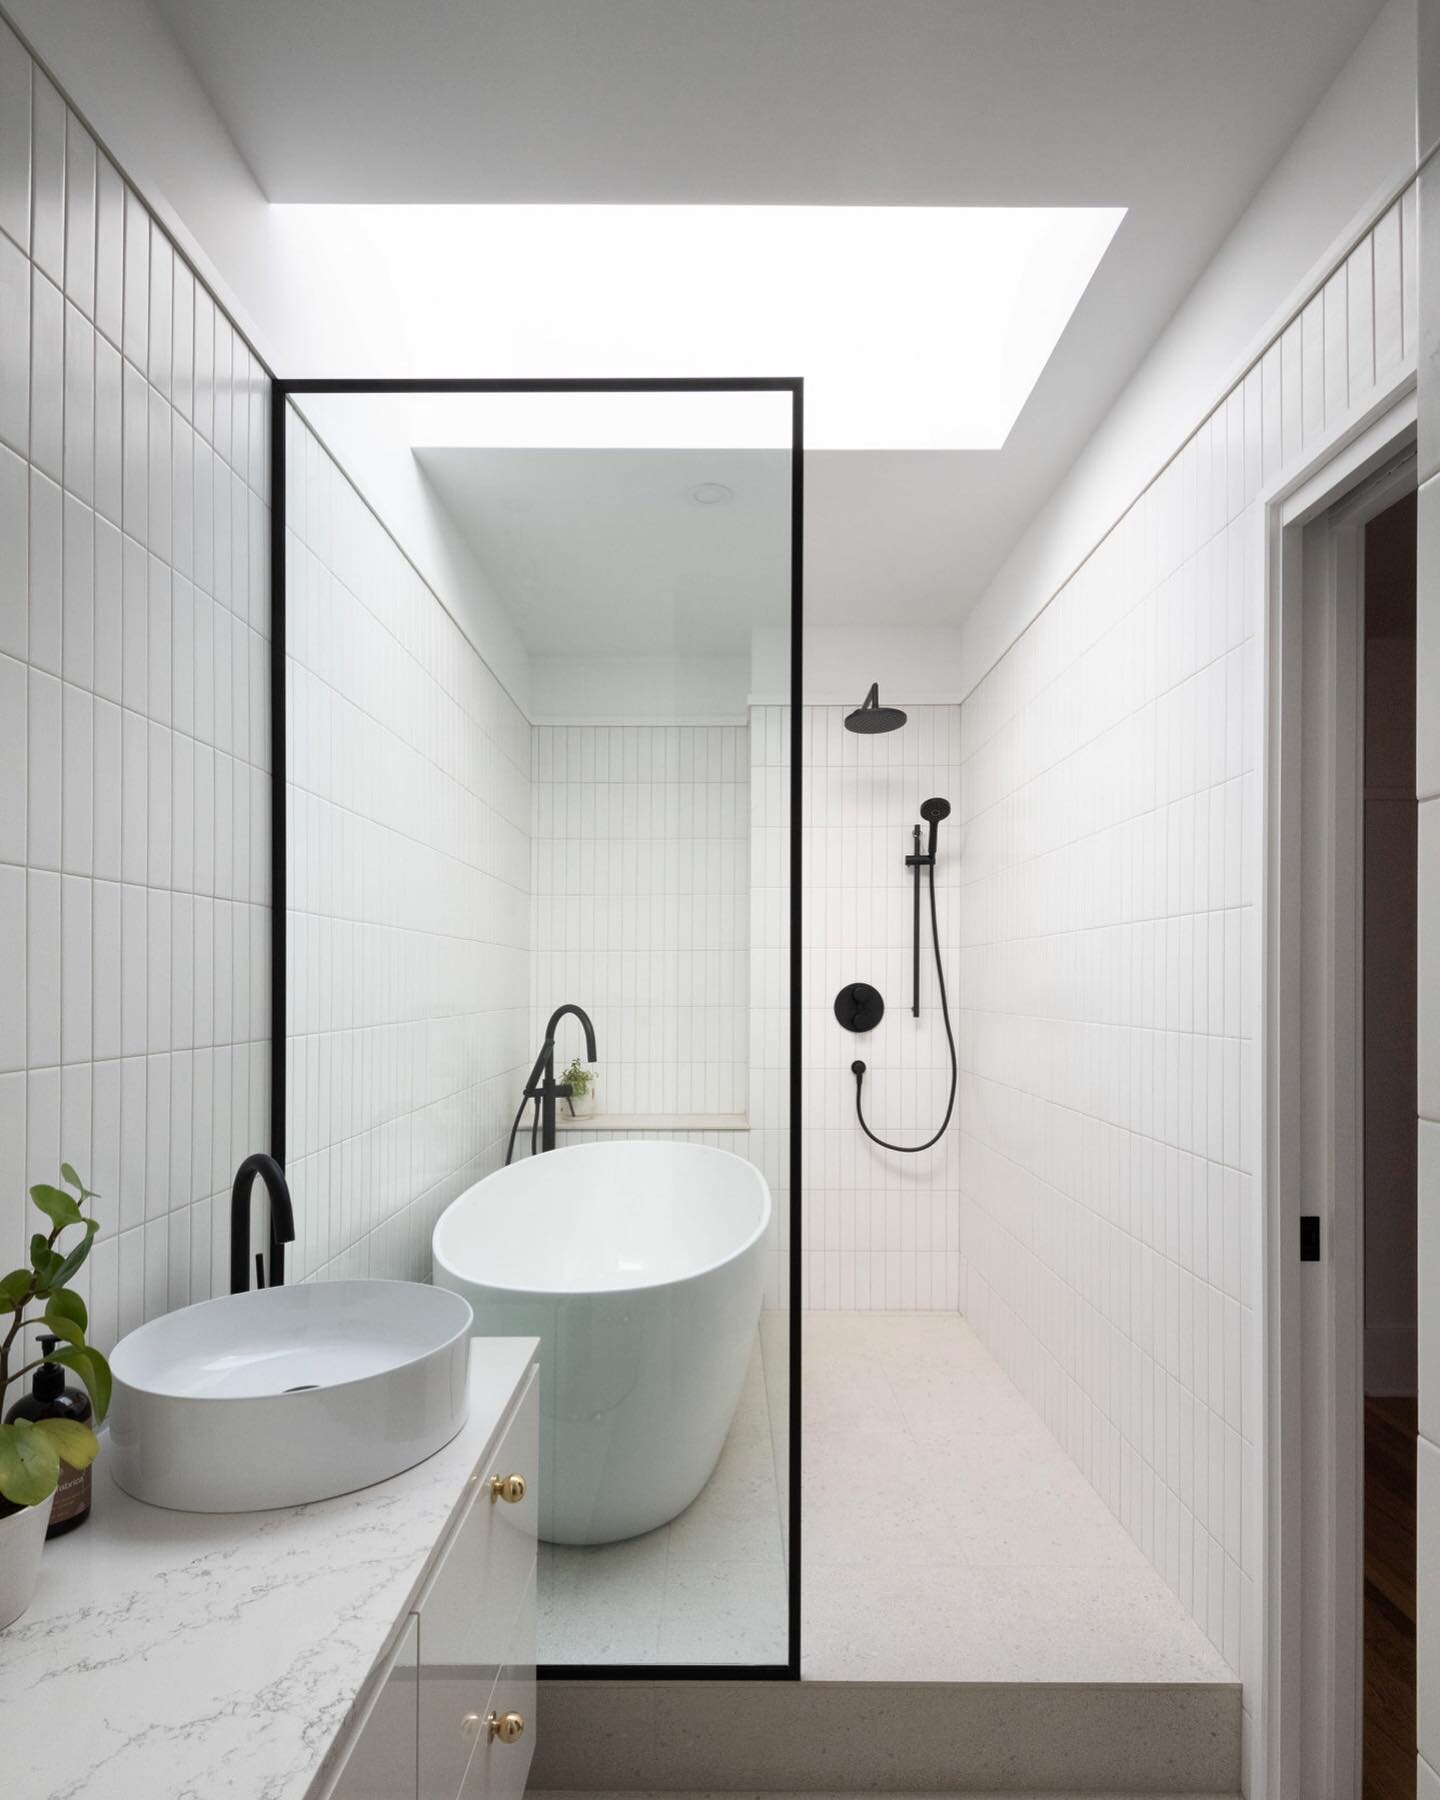 Bathroom goals anyone? Bright, clean, and timeless details. 

Architect: @ateliersuwa 
📸 : @studioluxmontreal 

#bathroomdesign #bathroomgoals #interiordesign #interiors #salledebain #bathroomrenovation #designmontreal #designbuild #generalcontracto